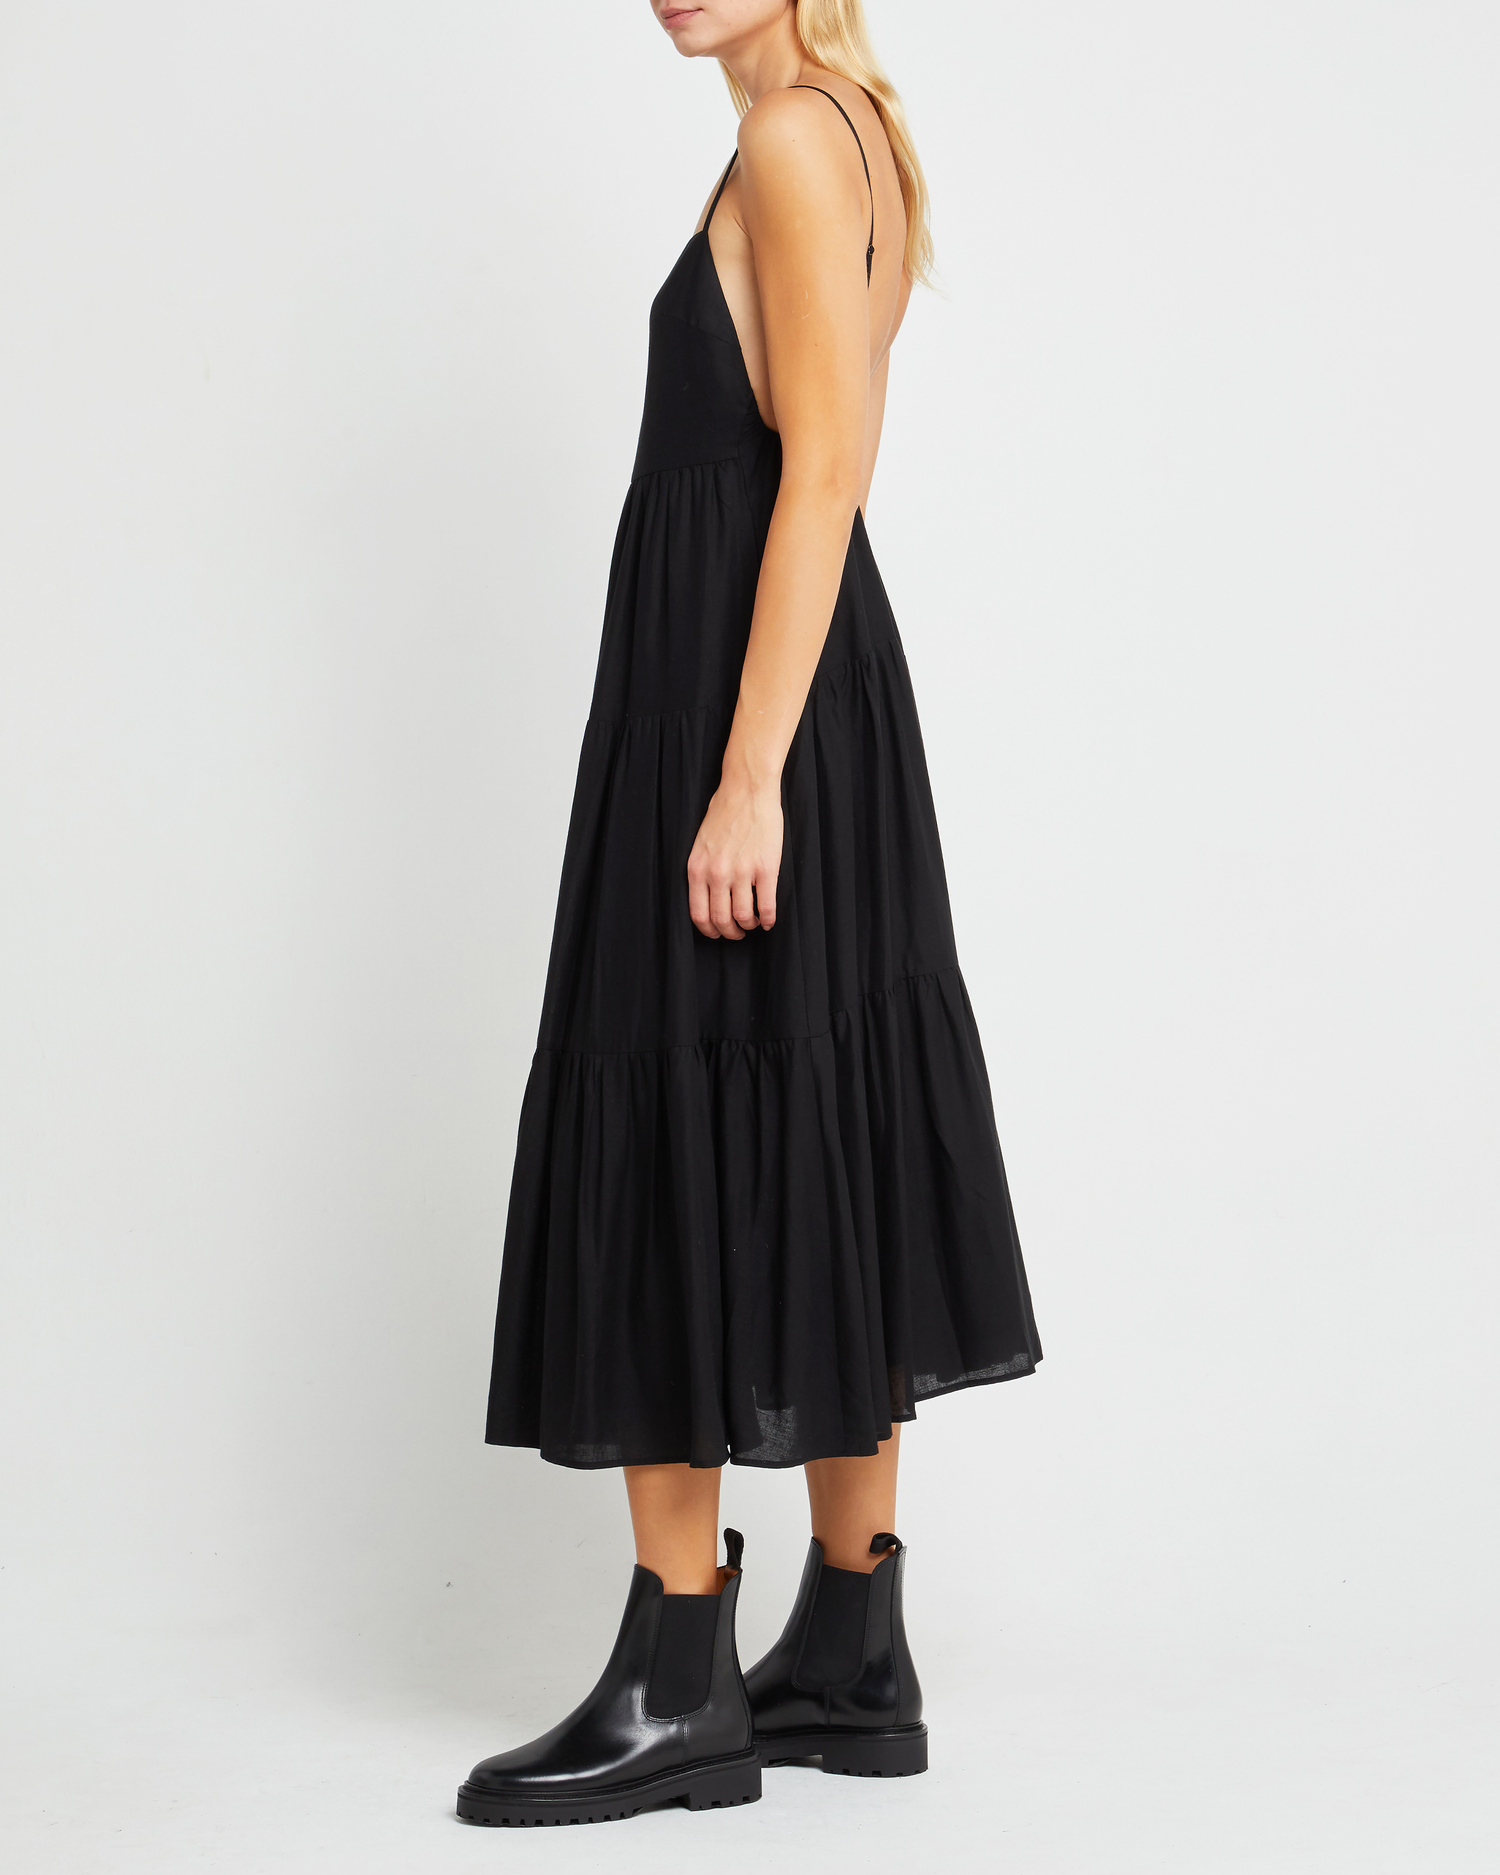 Third image of Coco Dress, a black midi dress, open back, spaghetti straps